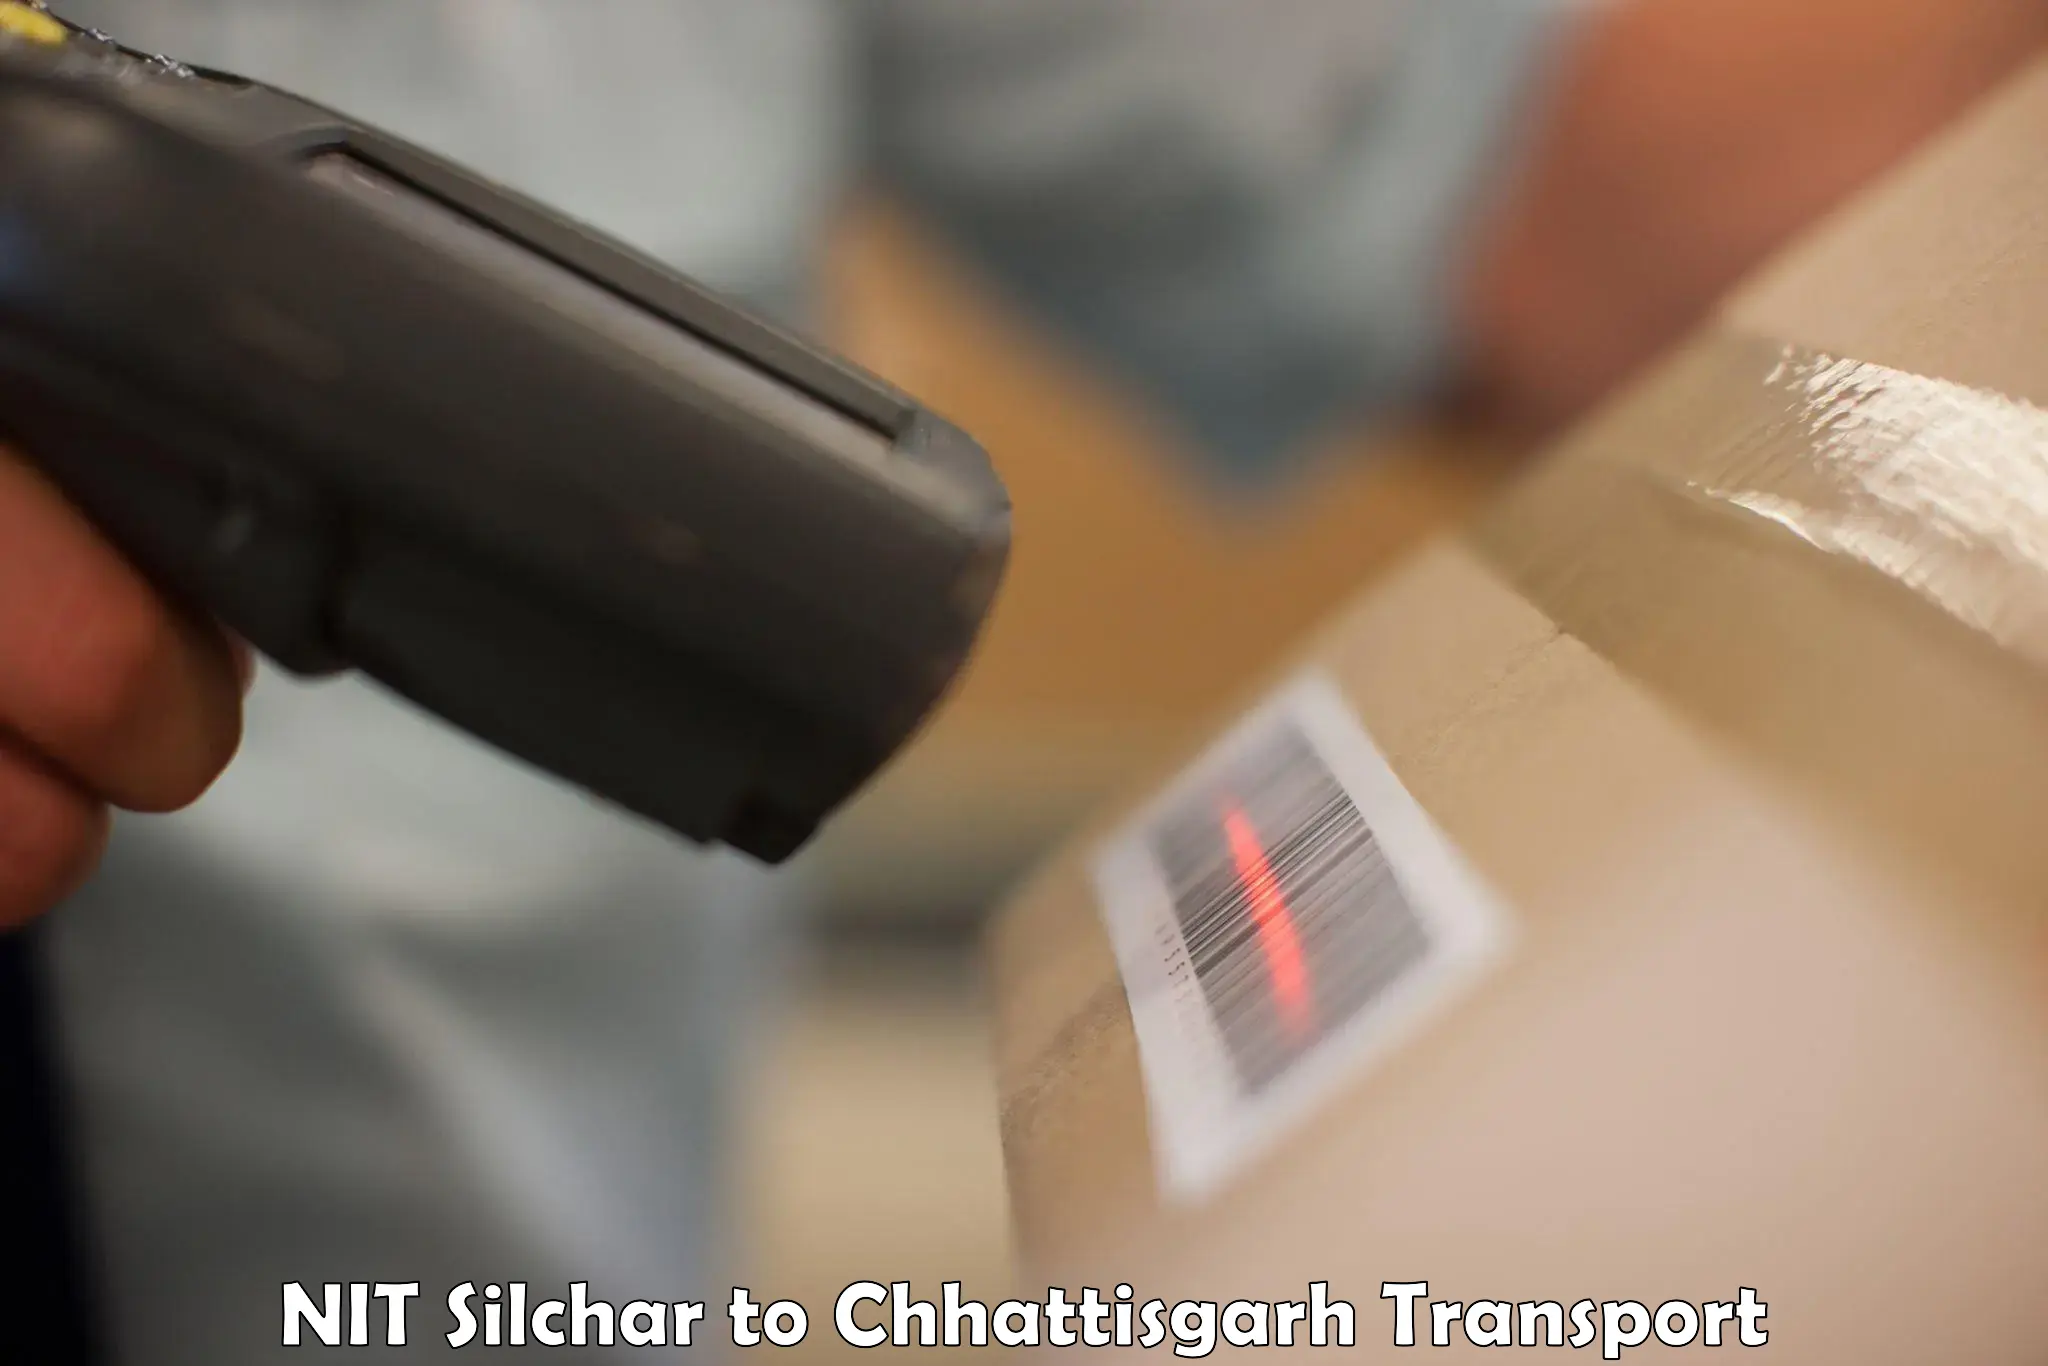 Cargo train transport services NIT Silchar to Raigarh Chhattisgarh